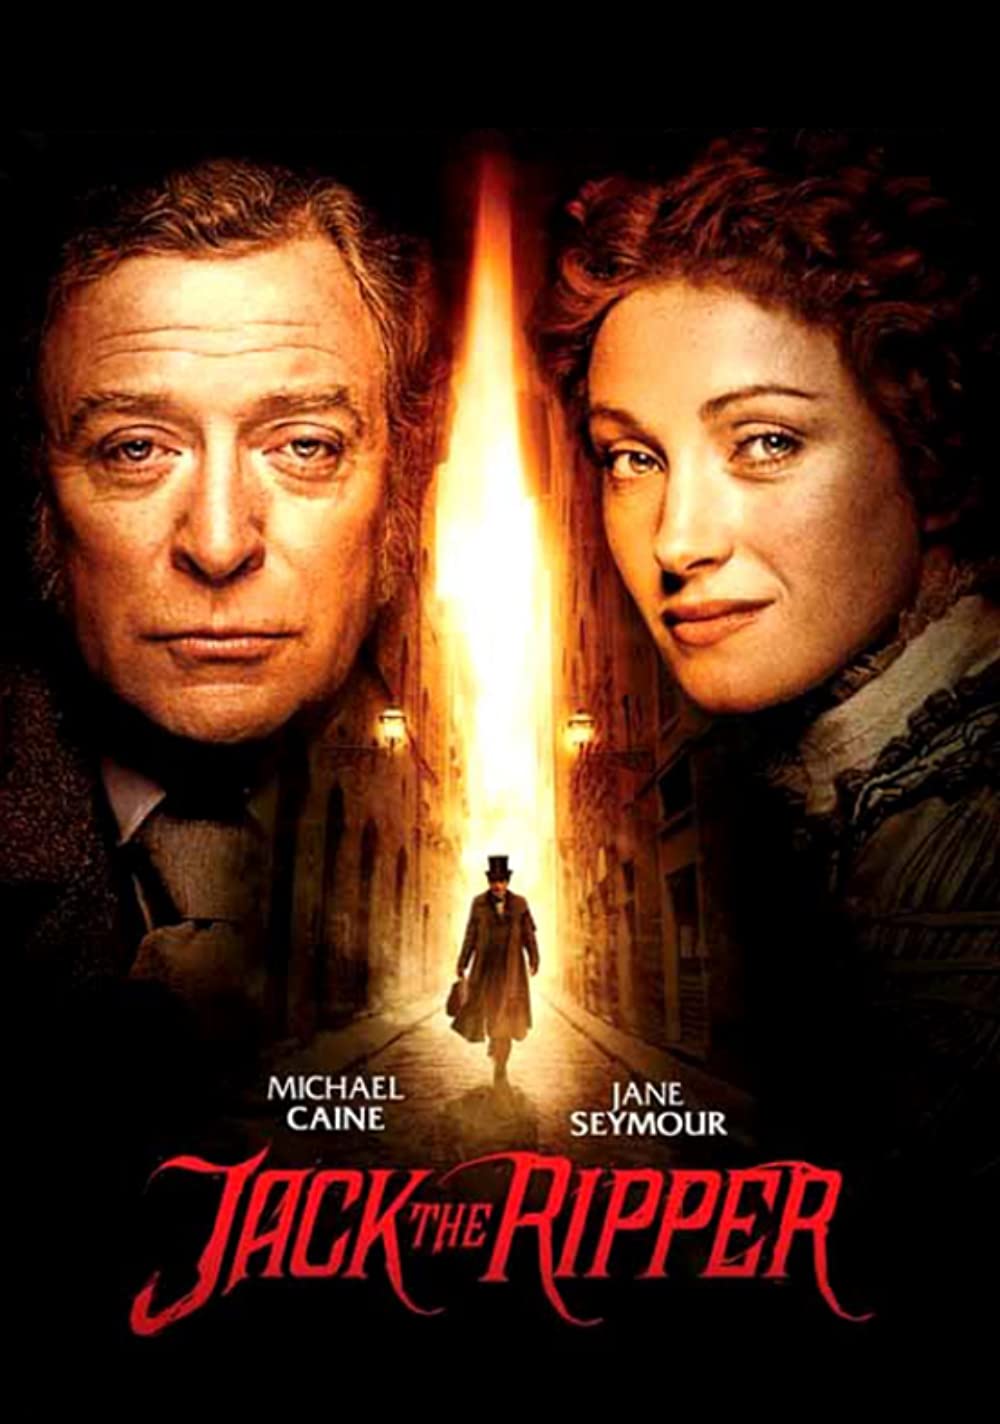 Jack the Ripper (1988)